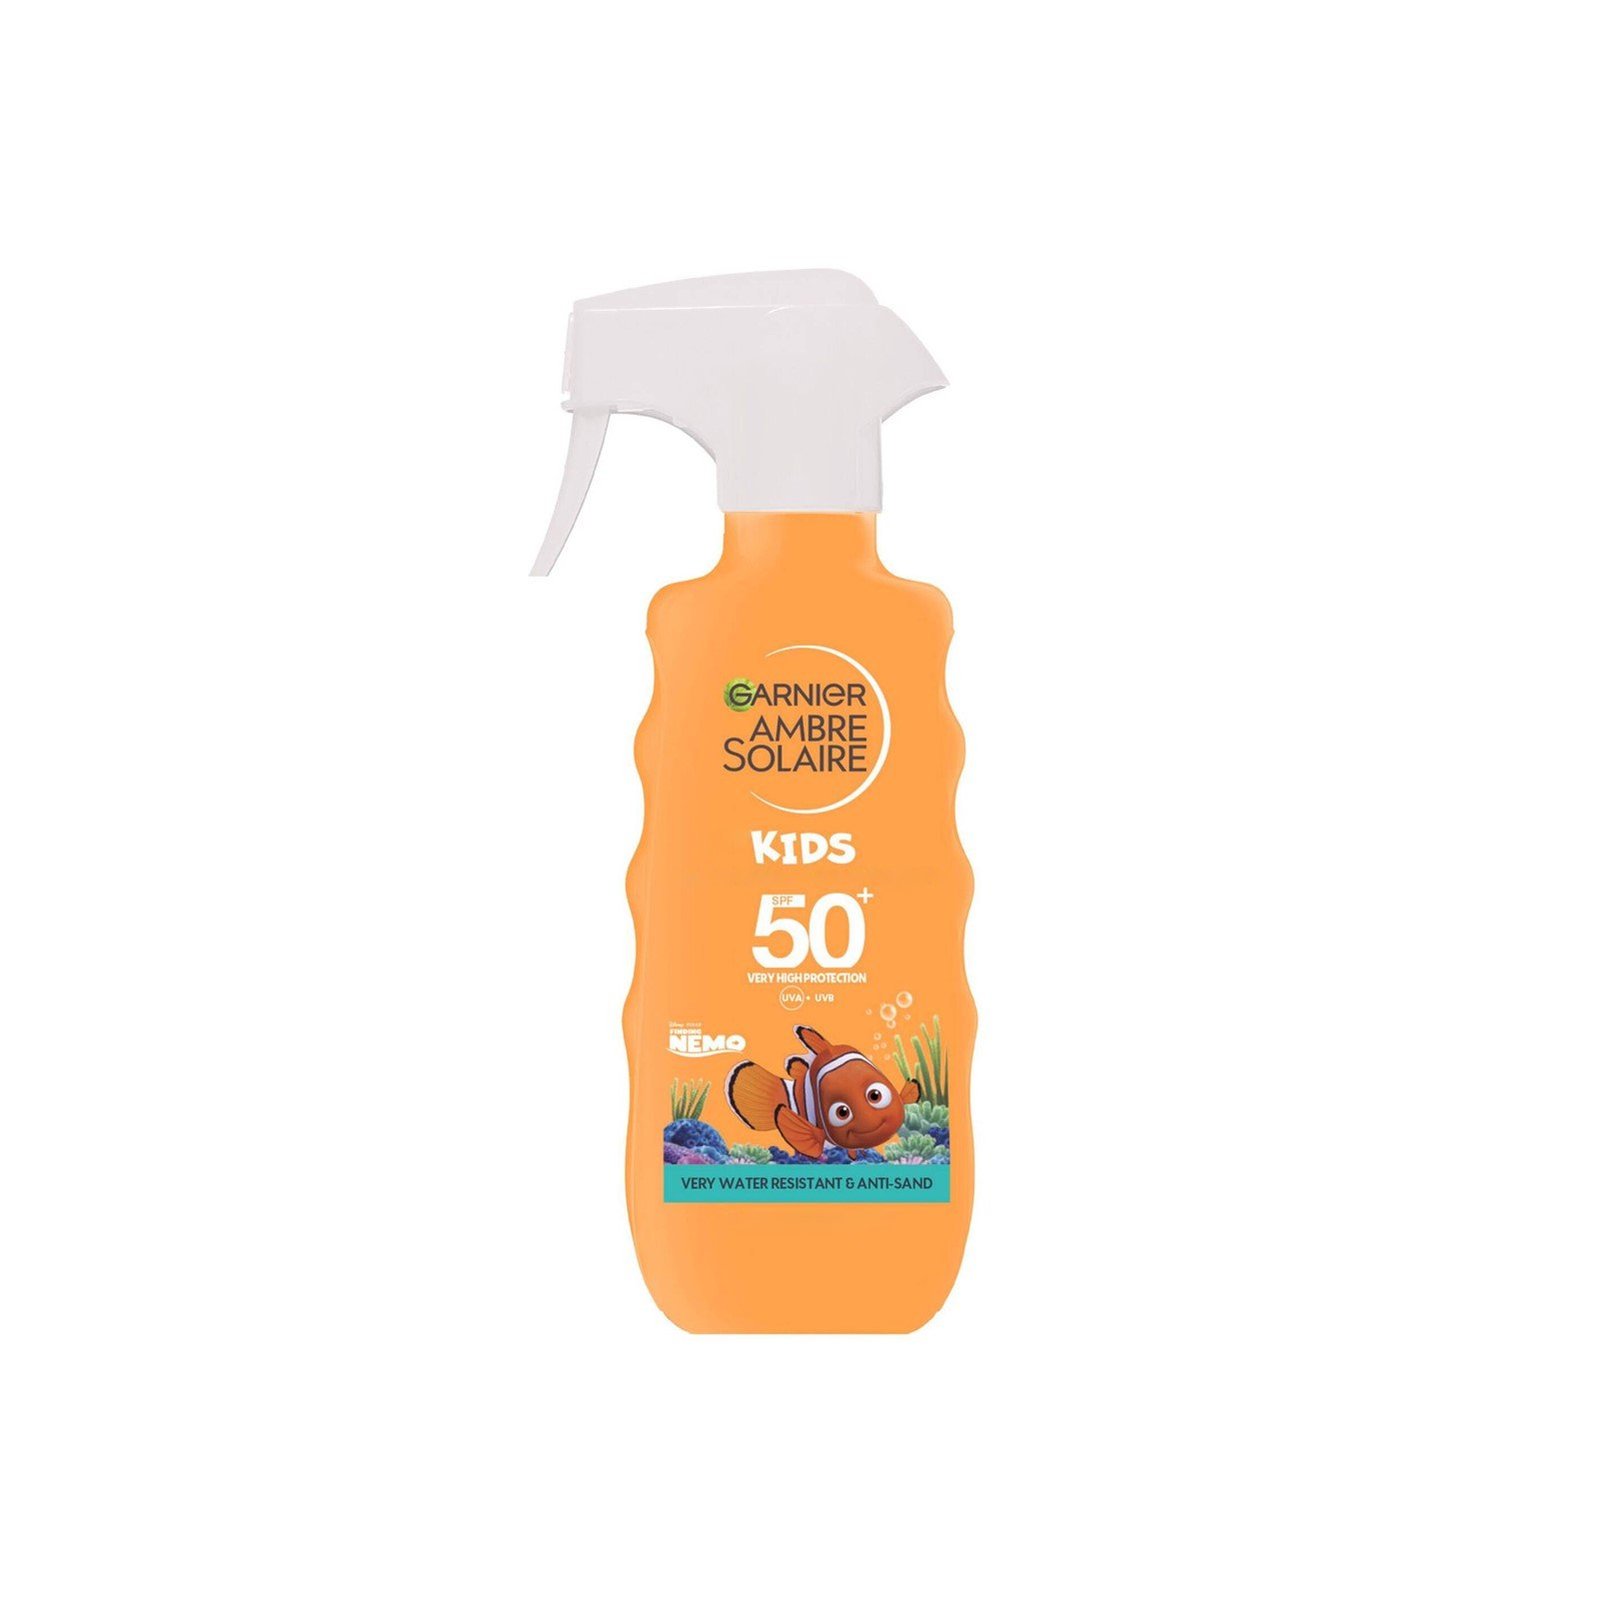 Garnier Ambre Solaire Kids Sun Protection Spray Nemo SPF50+ 270ml